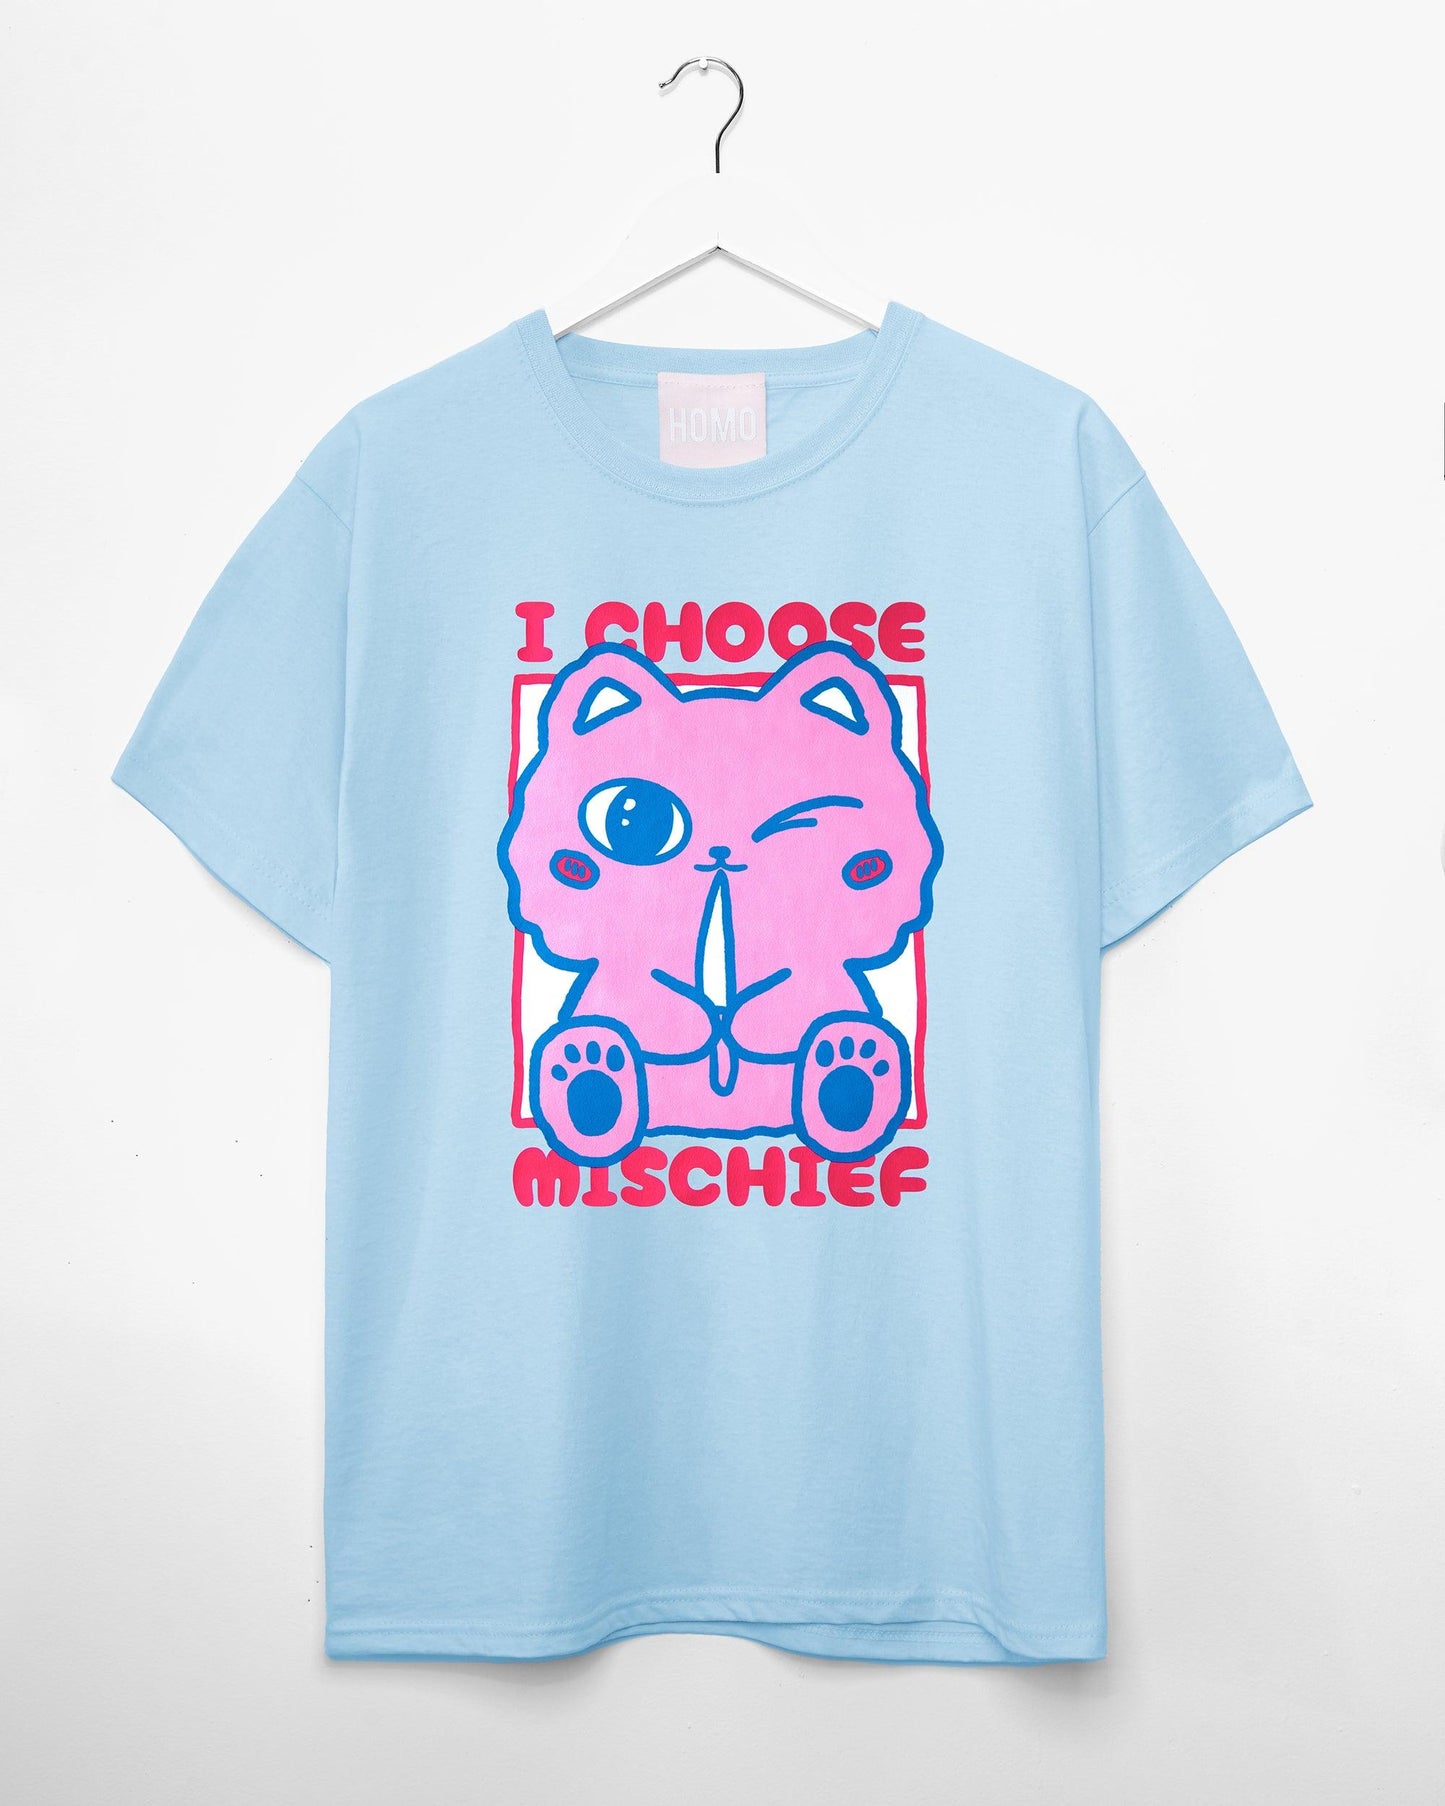 I choose mischief - light blue tshirt - HOMOLONDON